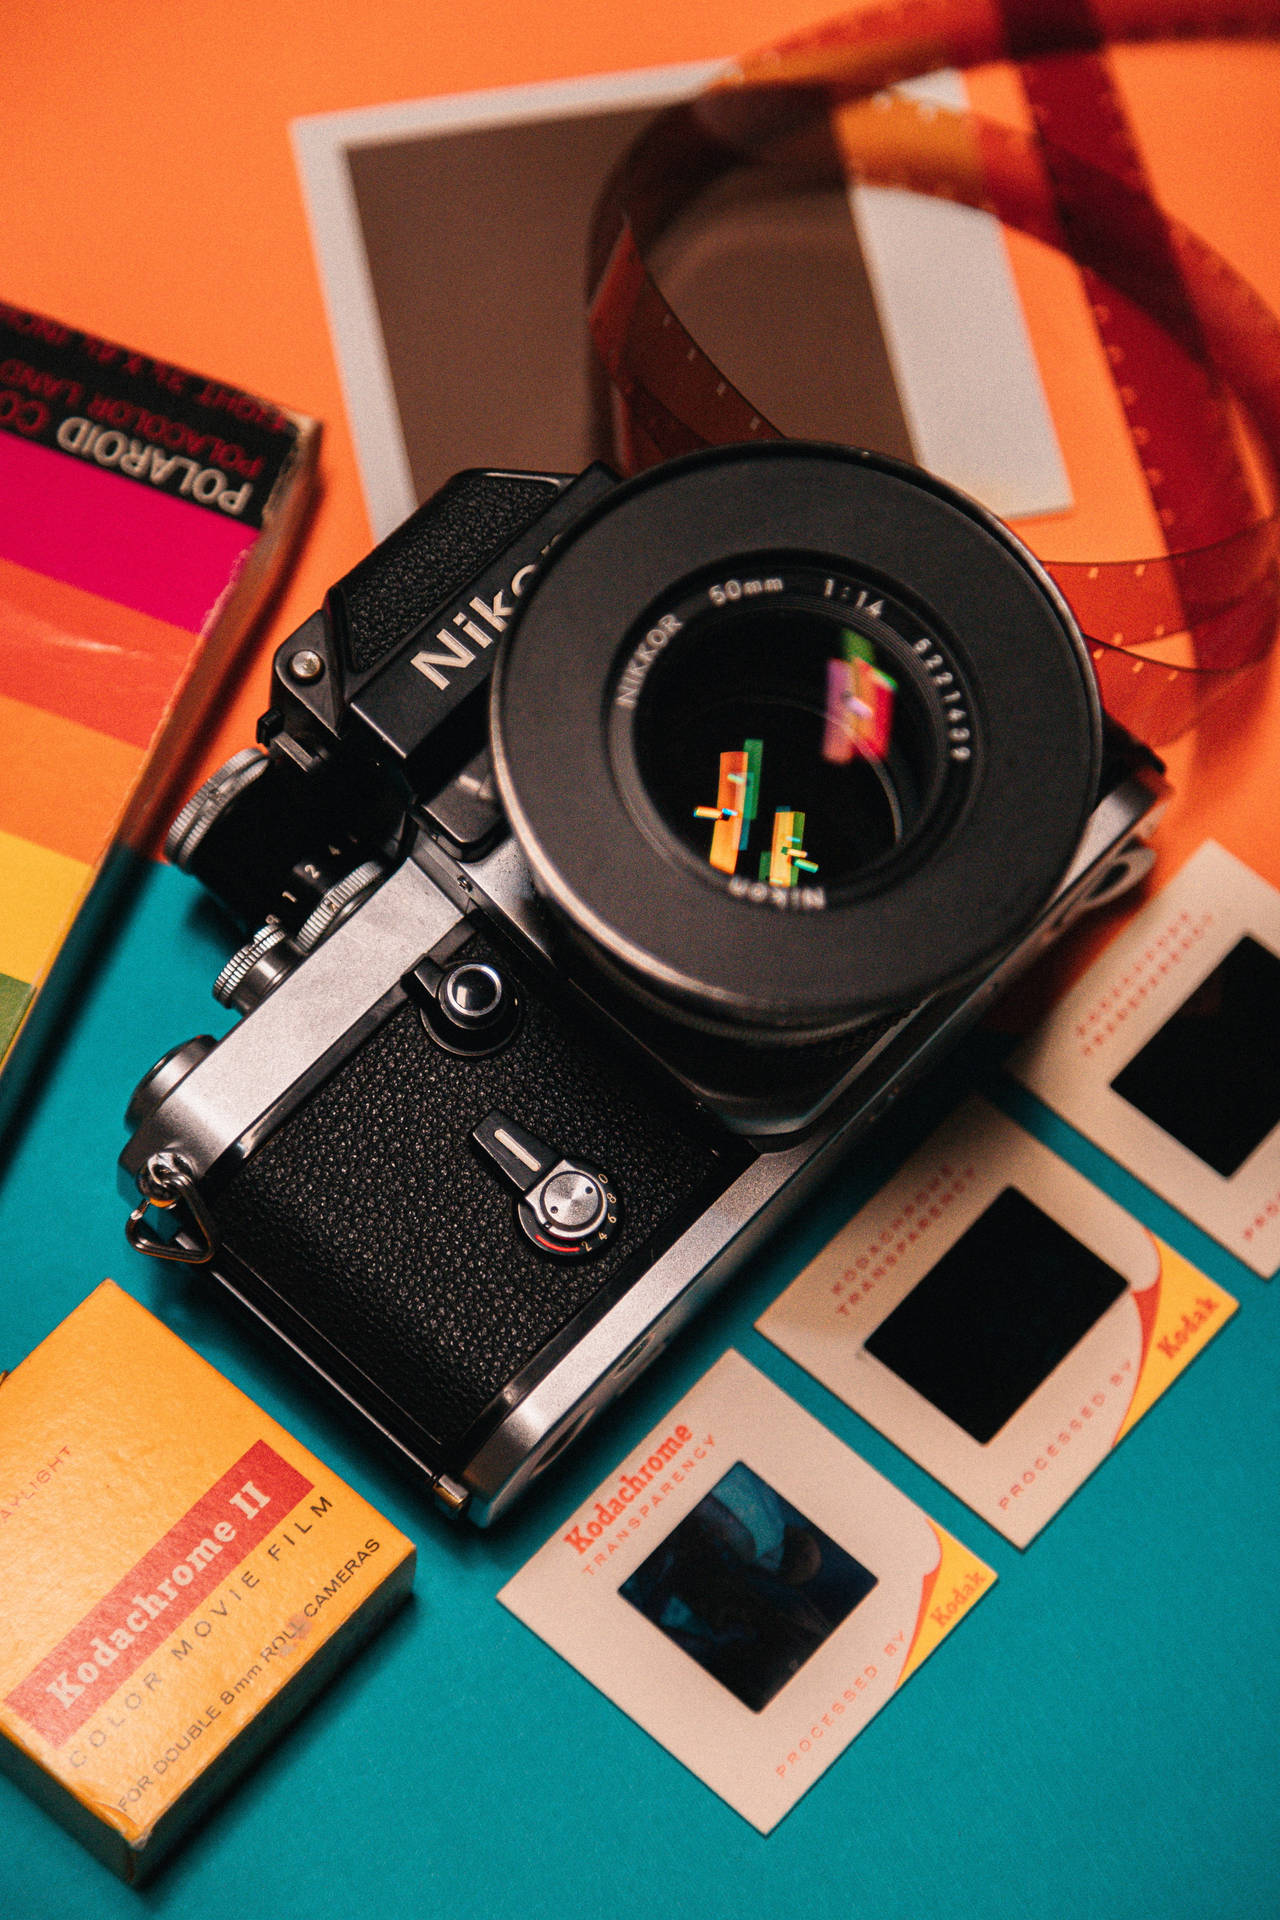 Nikon Dslr Camera And Polaroids Picture